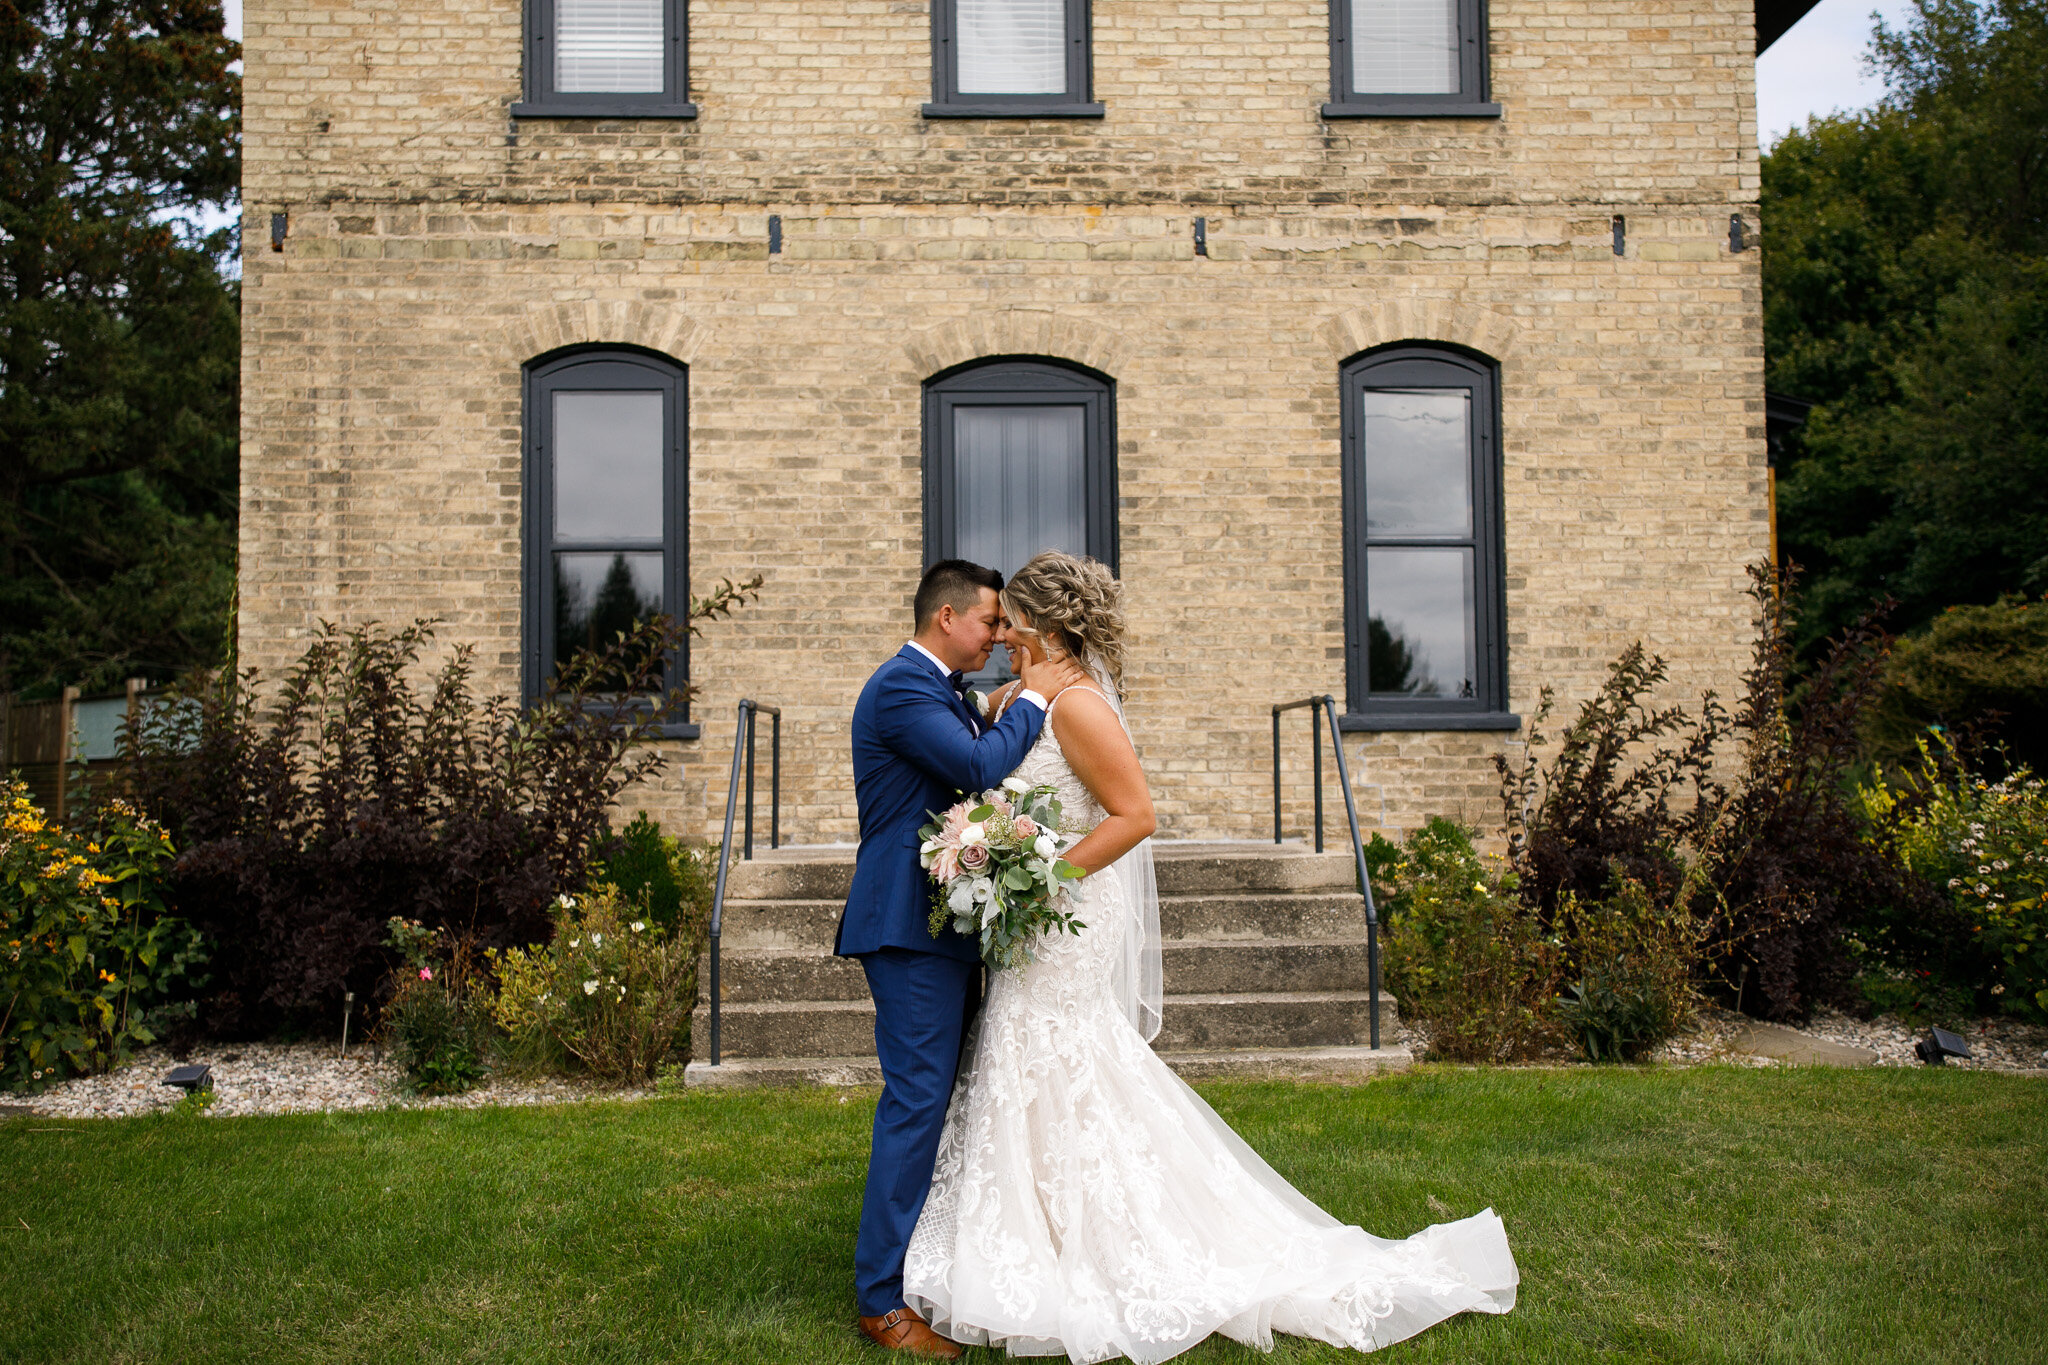 Pinnacle Center Wedding - Jillian and Rodrigo Wedding - Grand Rapids Wedding Photographer - West Michigan Wedding Photographer - West Michigan Wedding - Farmhouse Wedding - J Darling Photo075.jpg